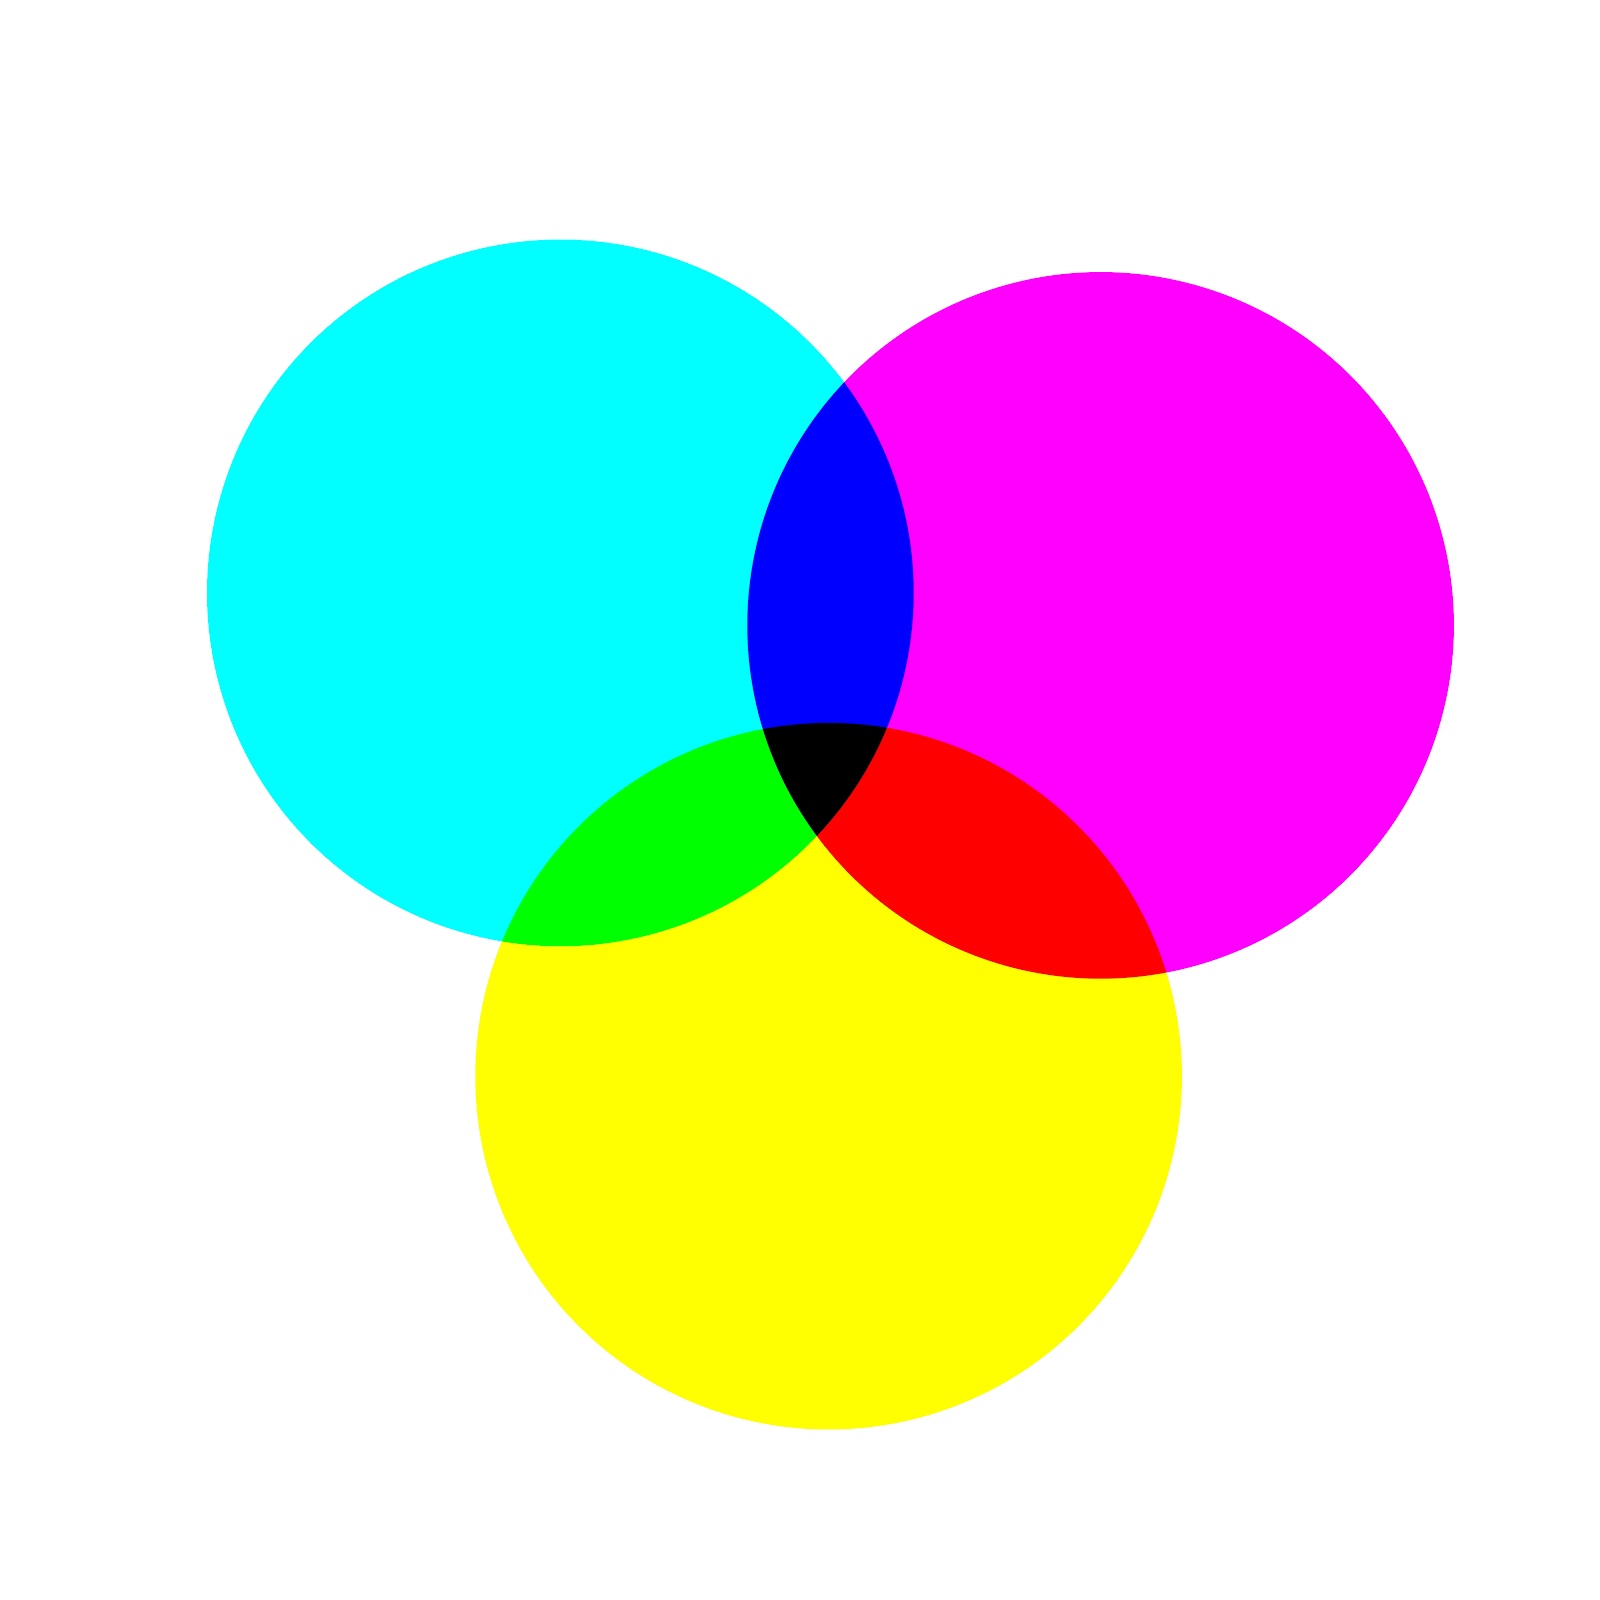 Cmyk 2. Цветовая модель CMY. CMYK цвета. Картины CMYK. Модель Смук.